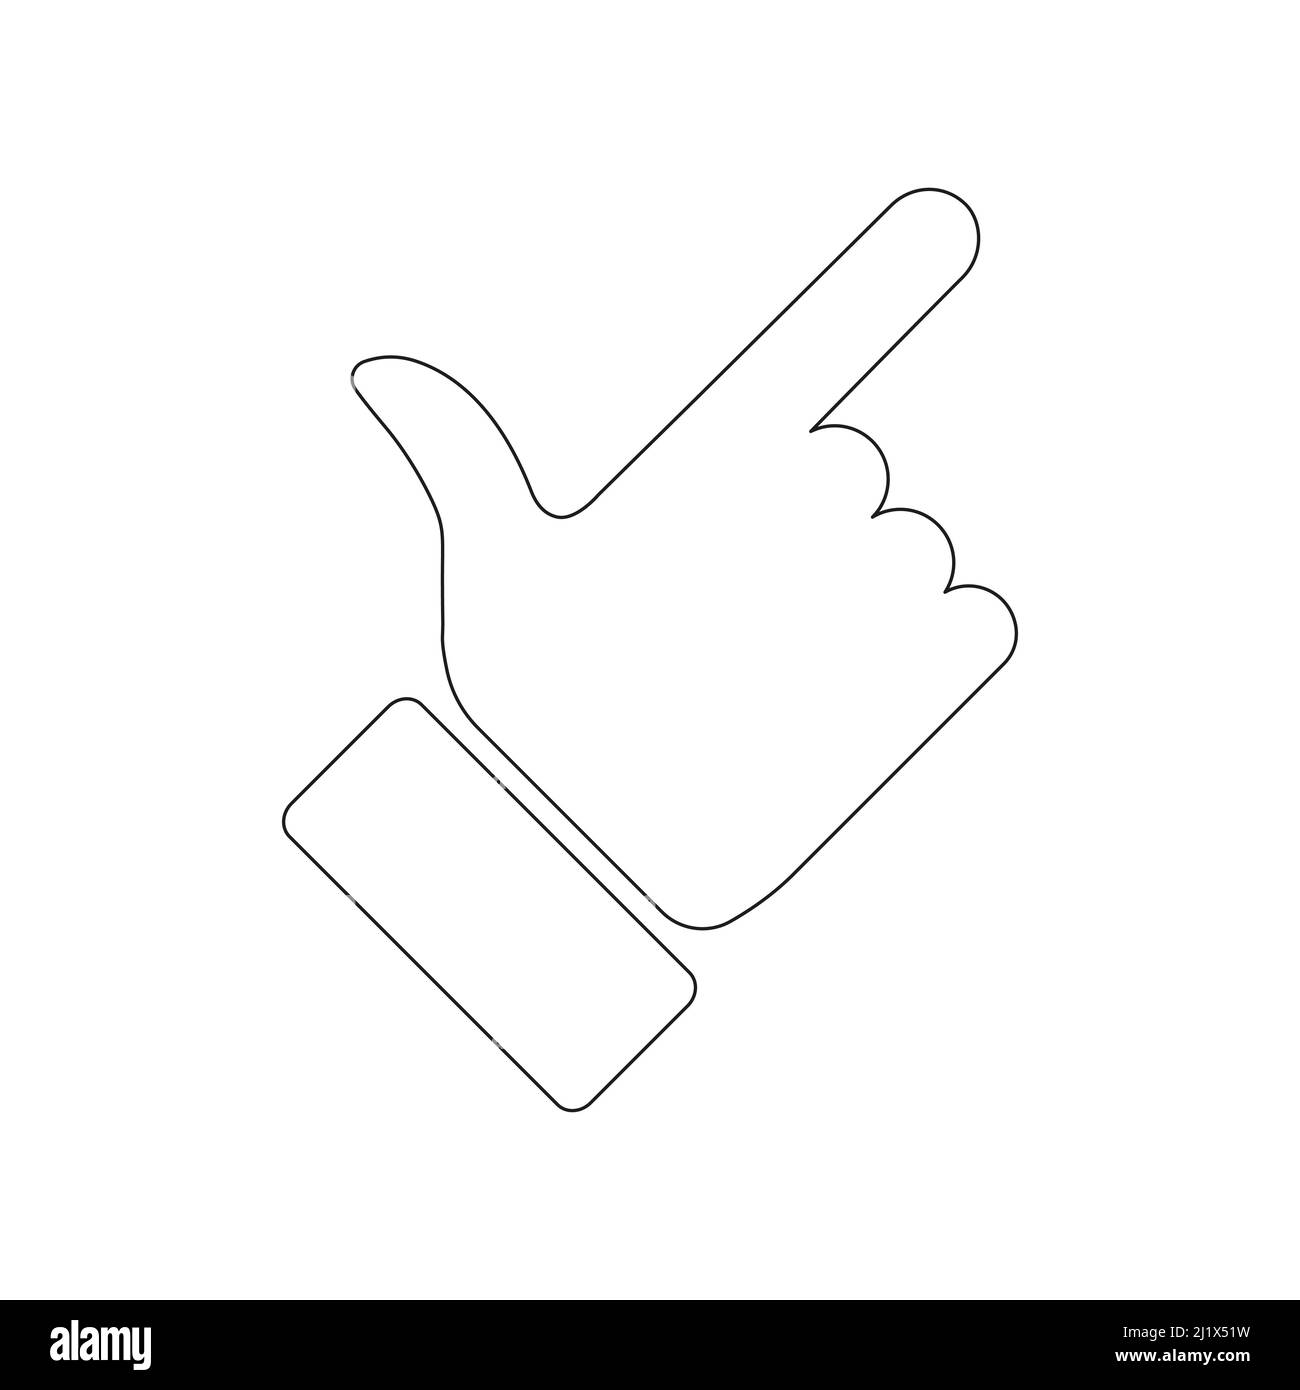 Finger pointer symbol. Hand line icon. Black arm gesture silhouette. Stock Vector